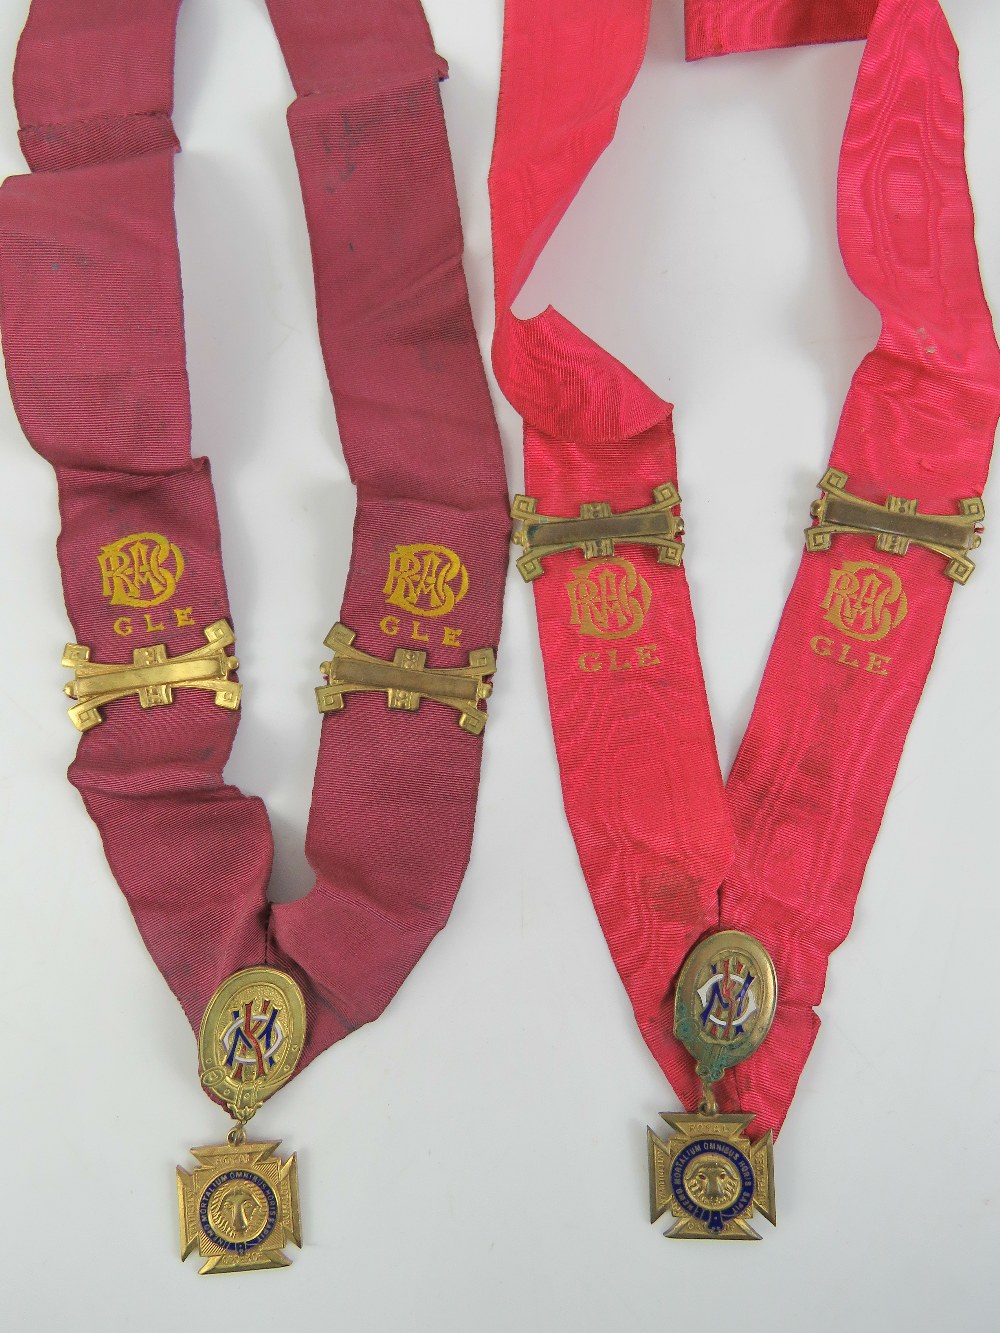 The Royal Antediluvian Order of Buffaloe